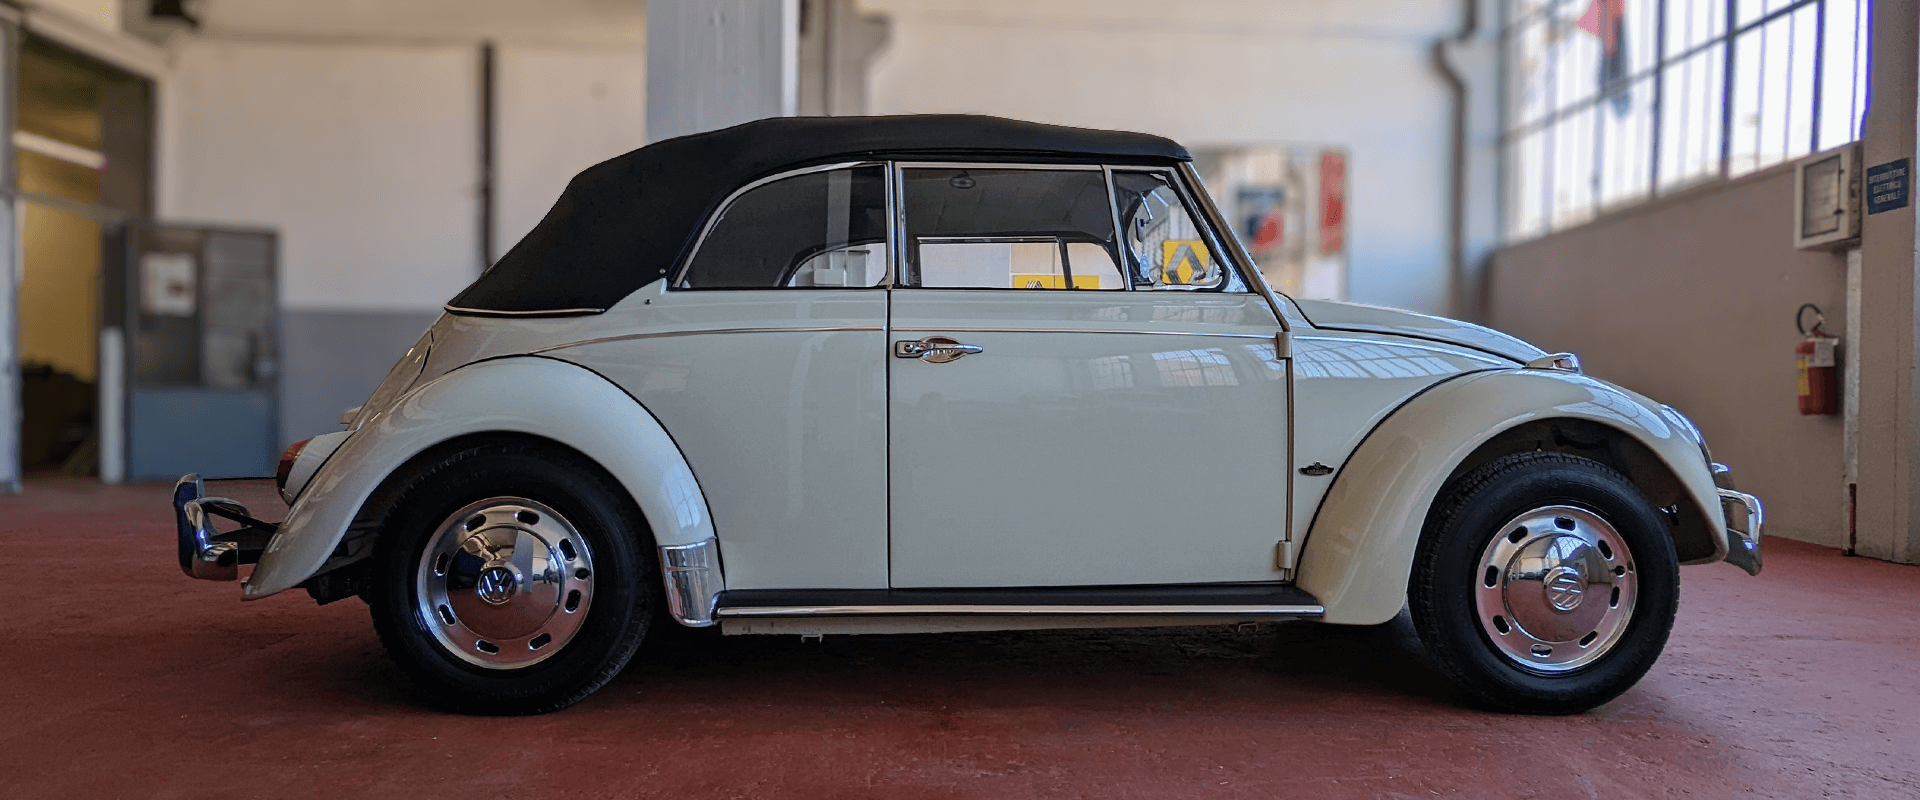 de marco parts restoration beetle classic car